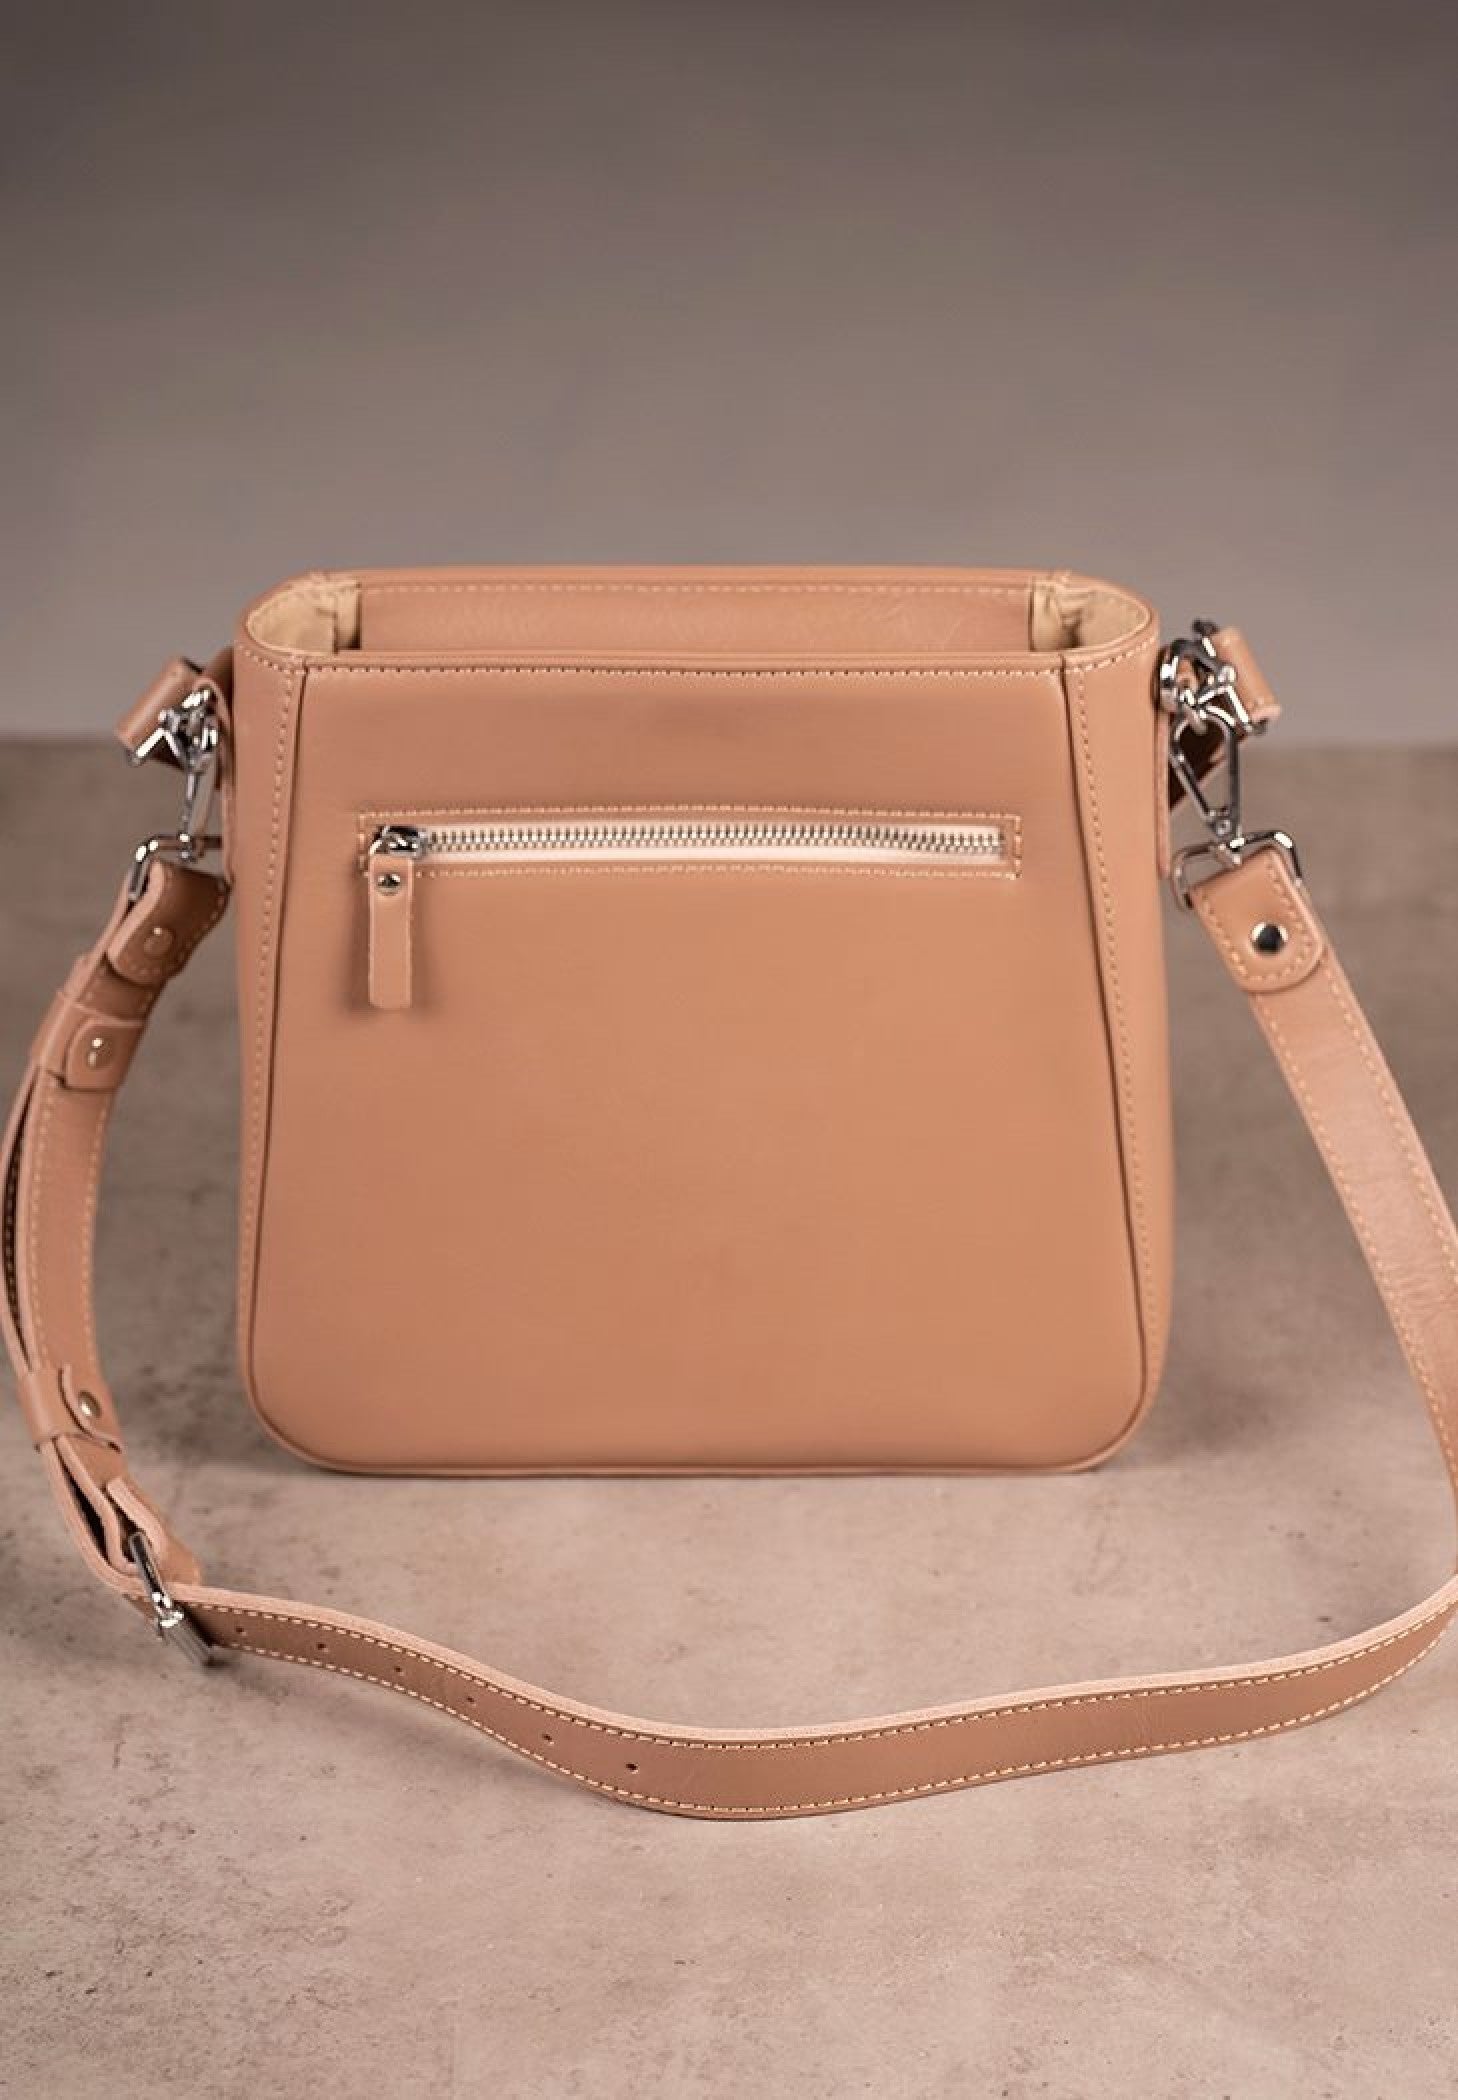  Women's handbag in leather color caramel.